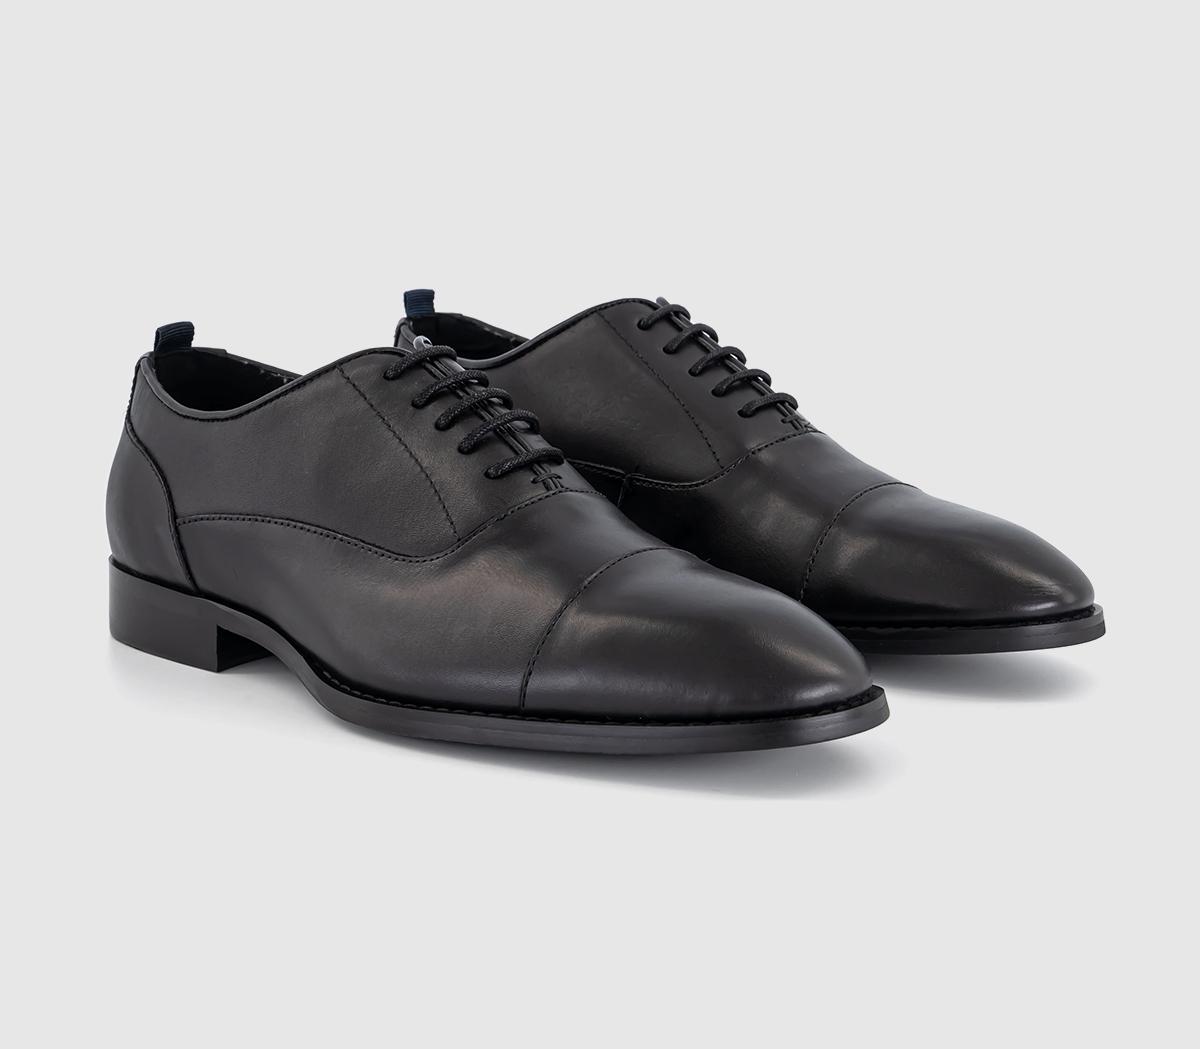 OFFICE Mens Montana Toecap Oxford Shoes Black Leather, 12